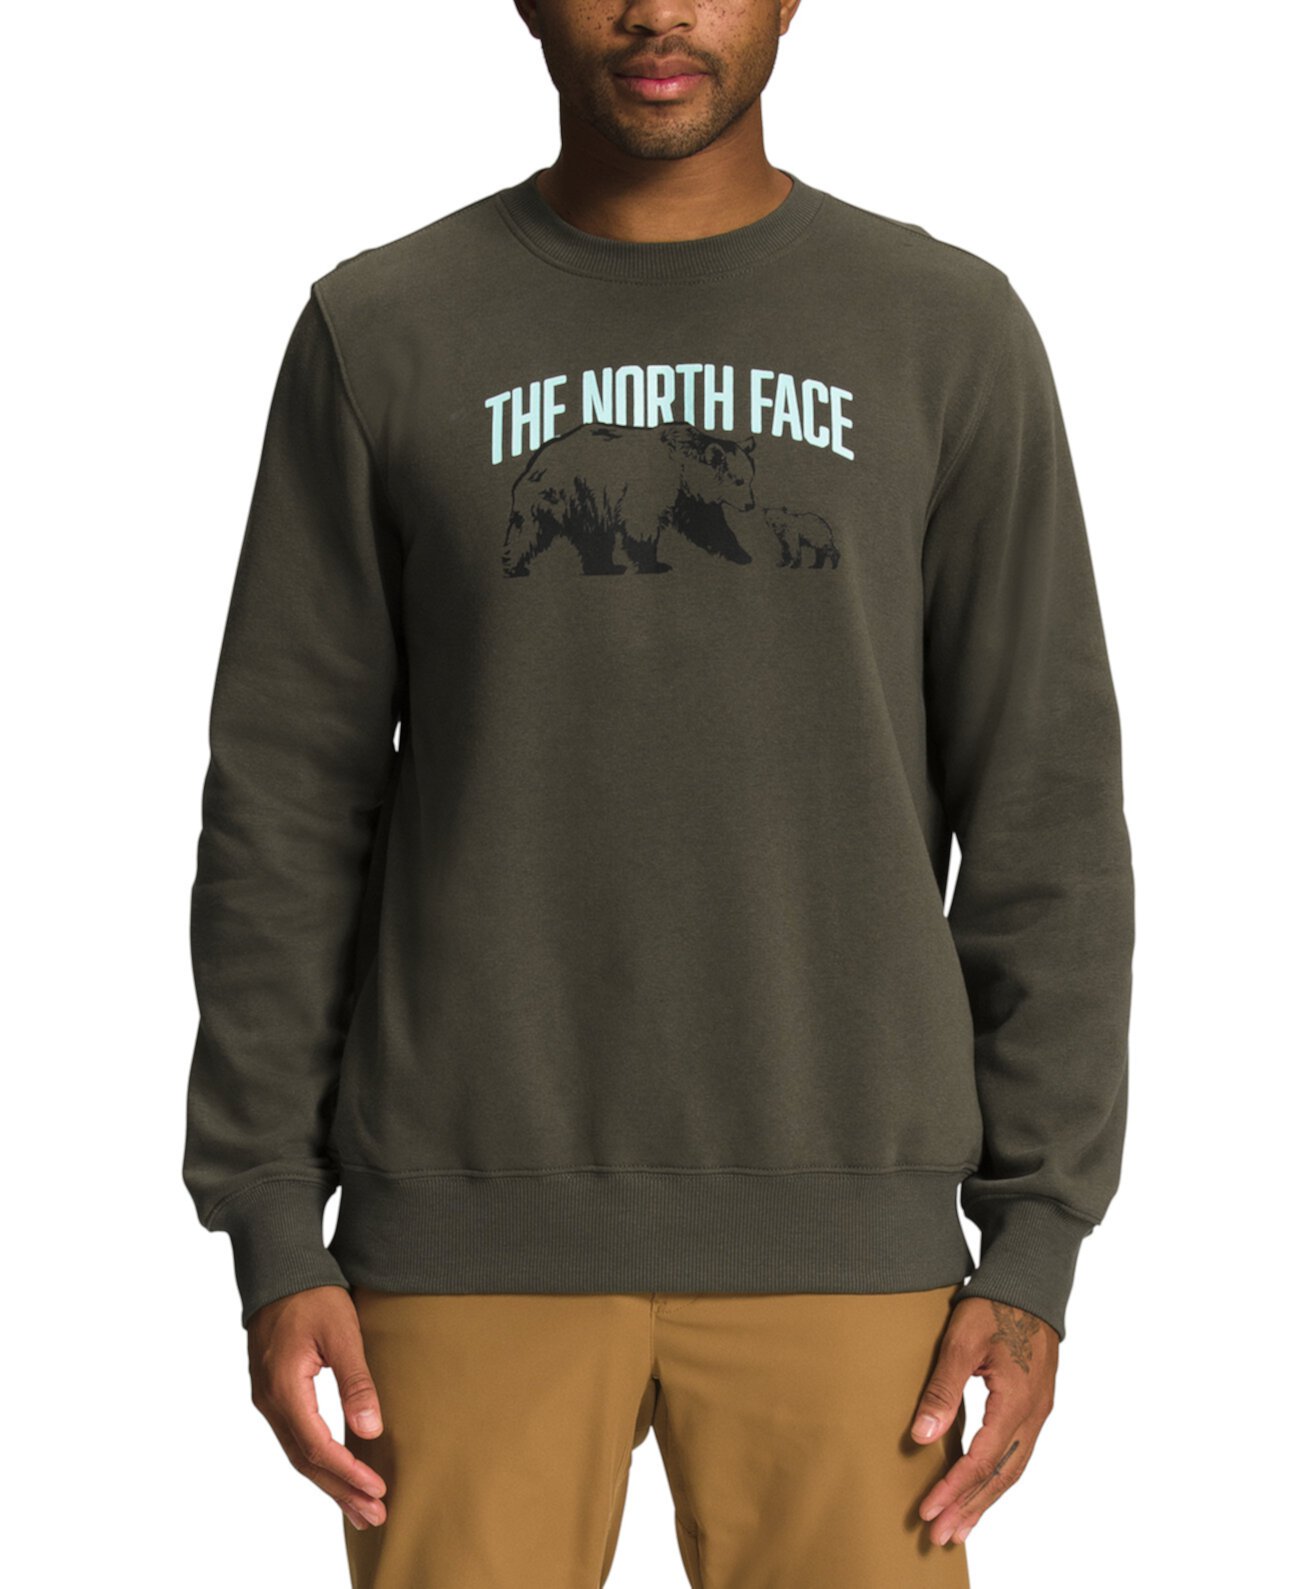 Men's Places We Love Crew Graphic Sweatshirt The North Face